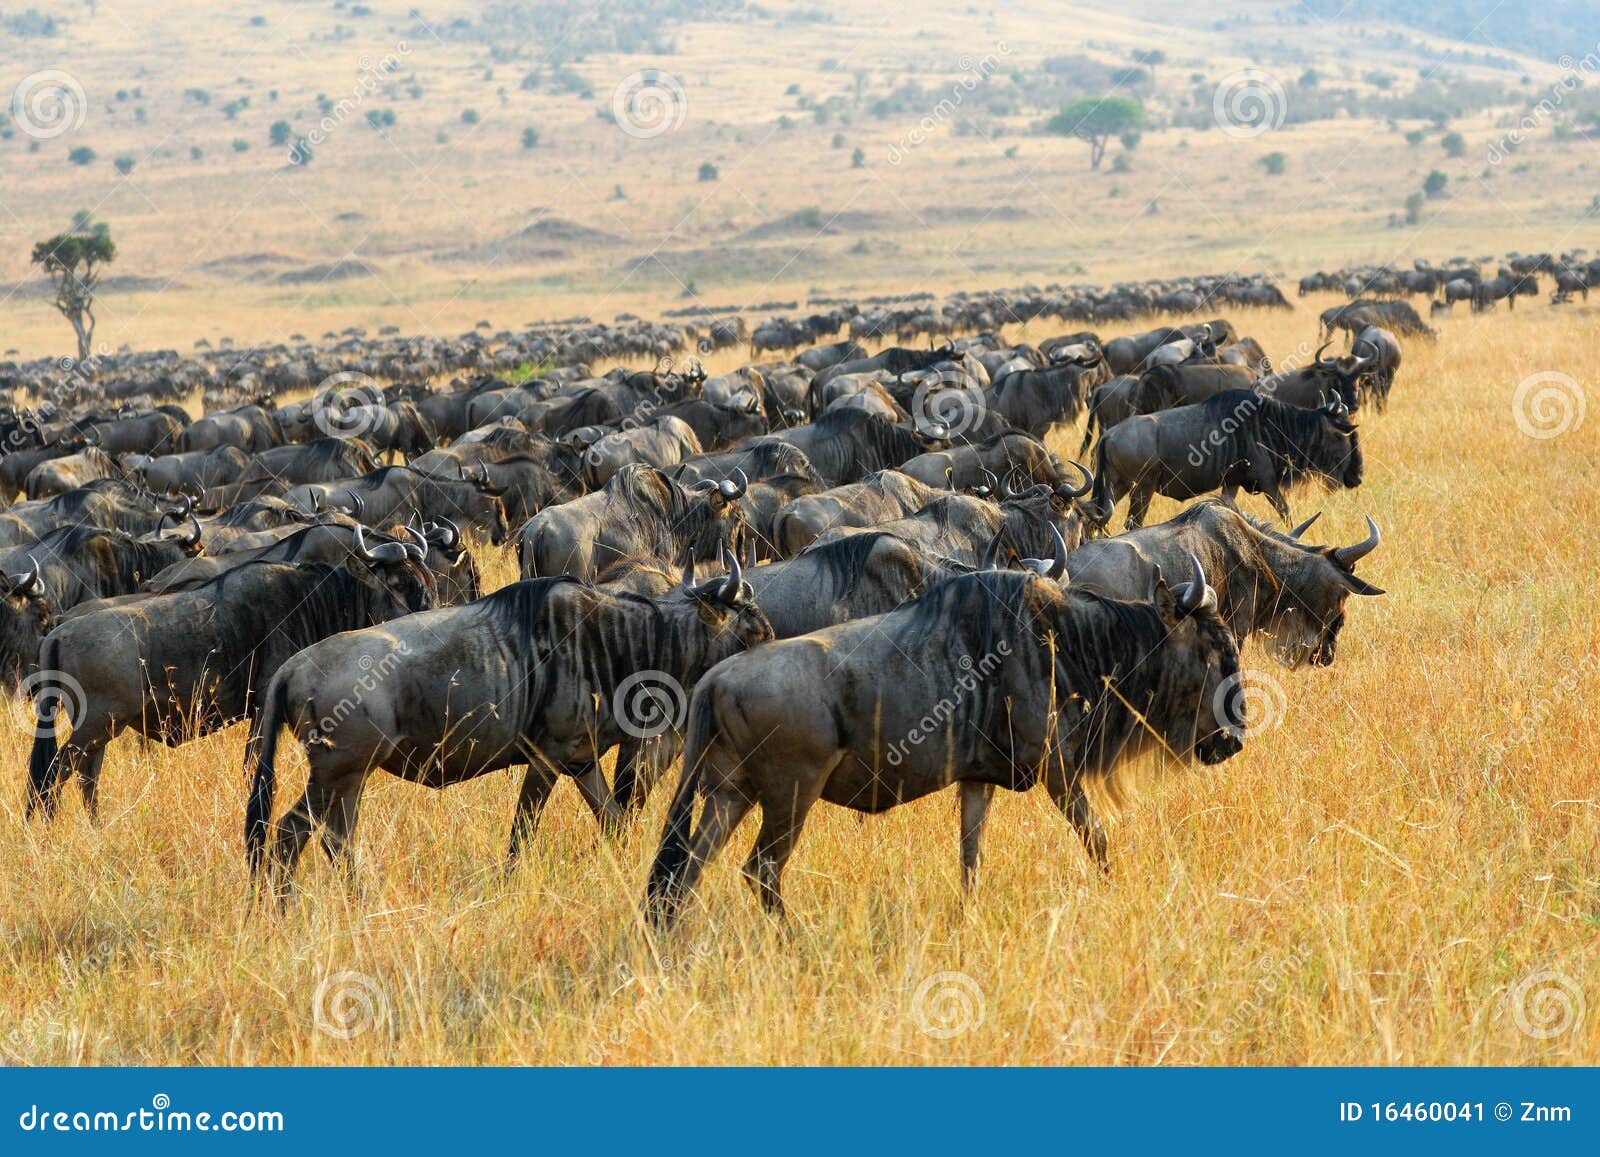 great migration of antelopes wildebeest, kenya